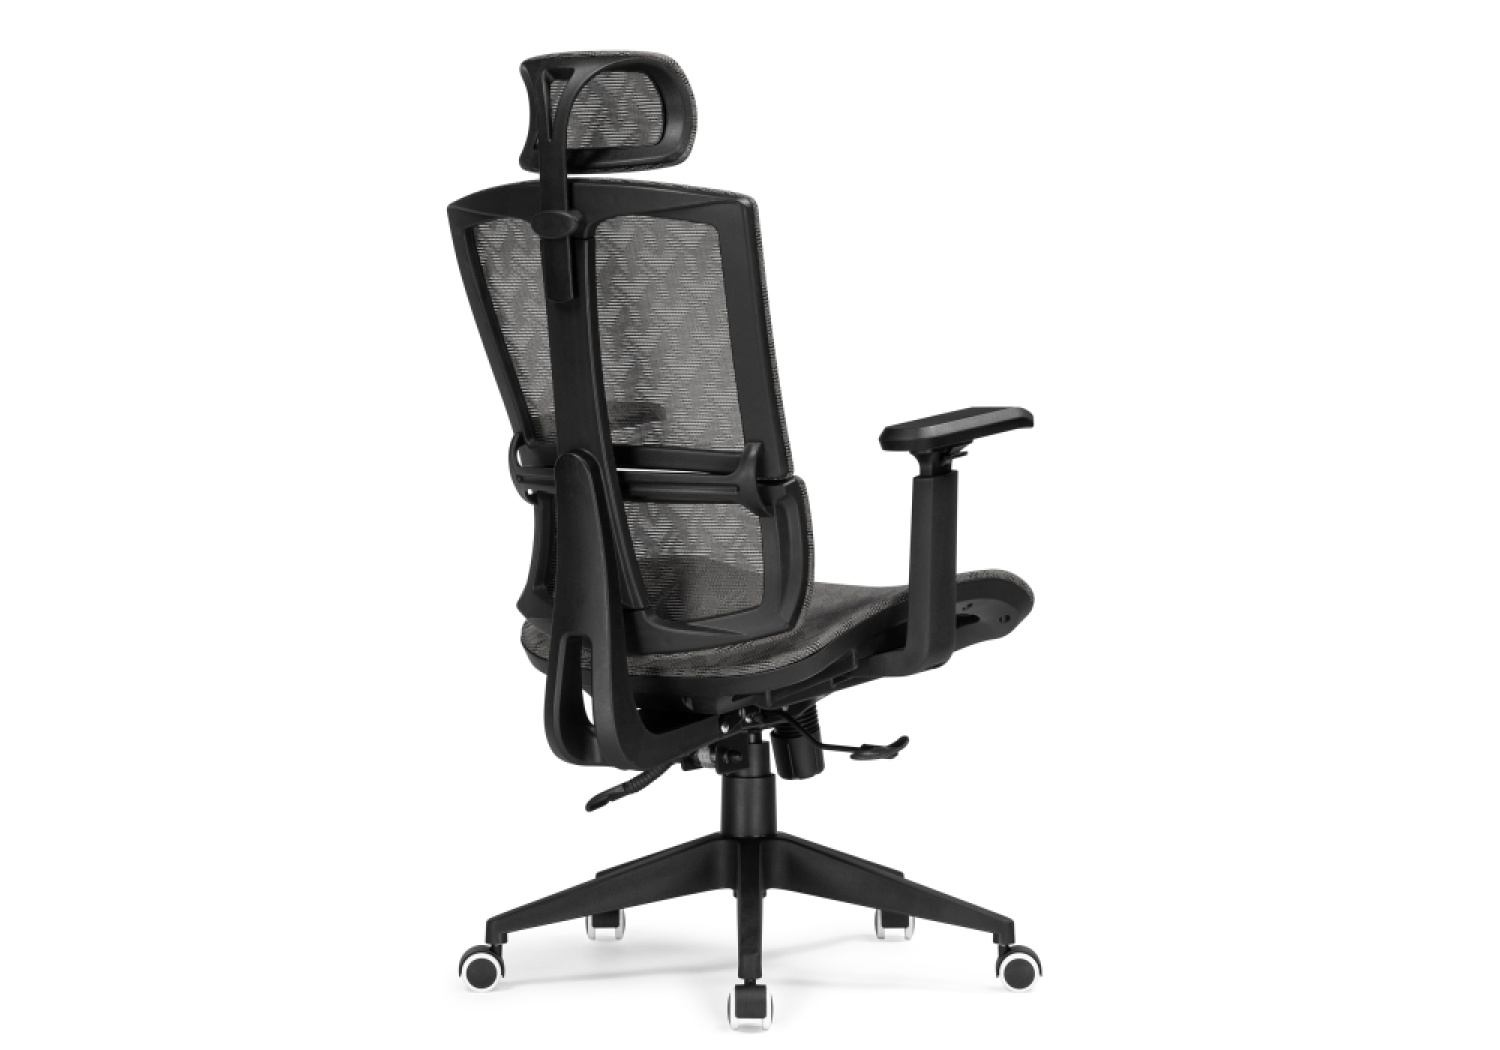 Офисное кресло Lanus gray / black